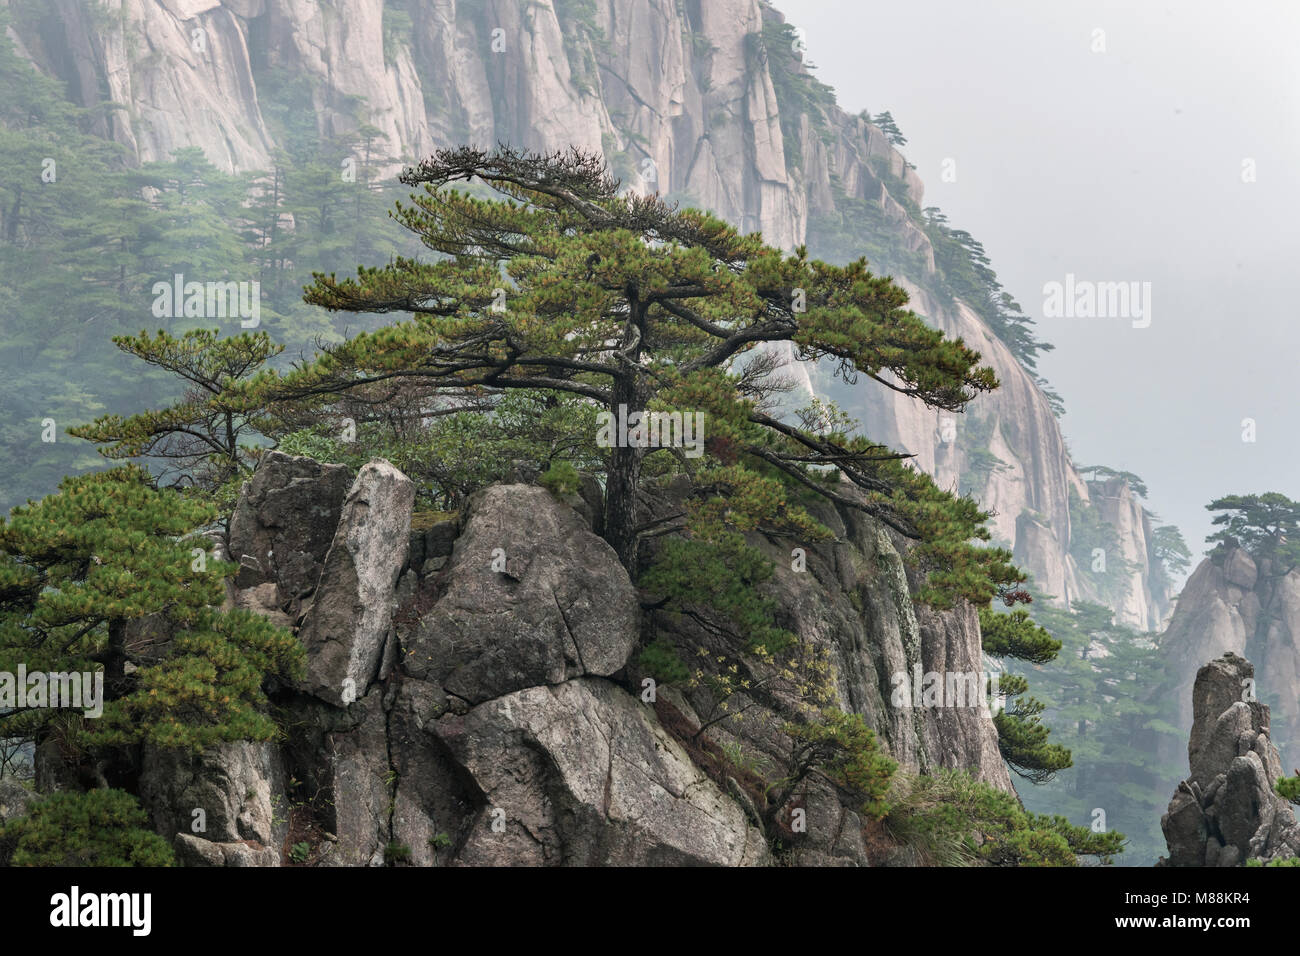 Huangshan pines (Pinus hwangshanensis) and granite cliffs, Huangshan Mountains, China Stock Photo